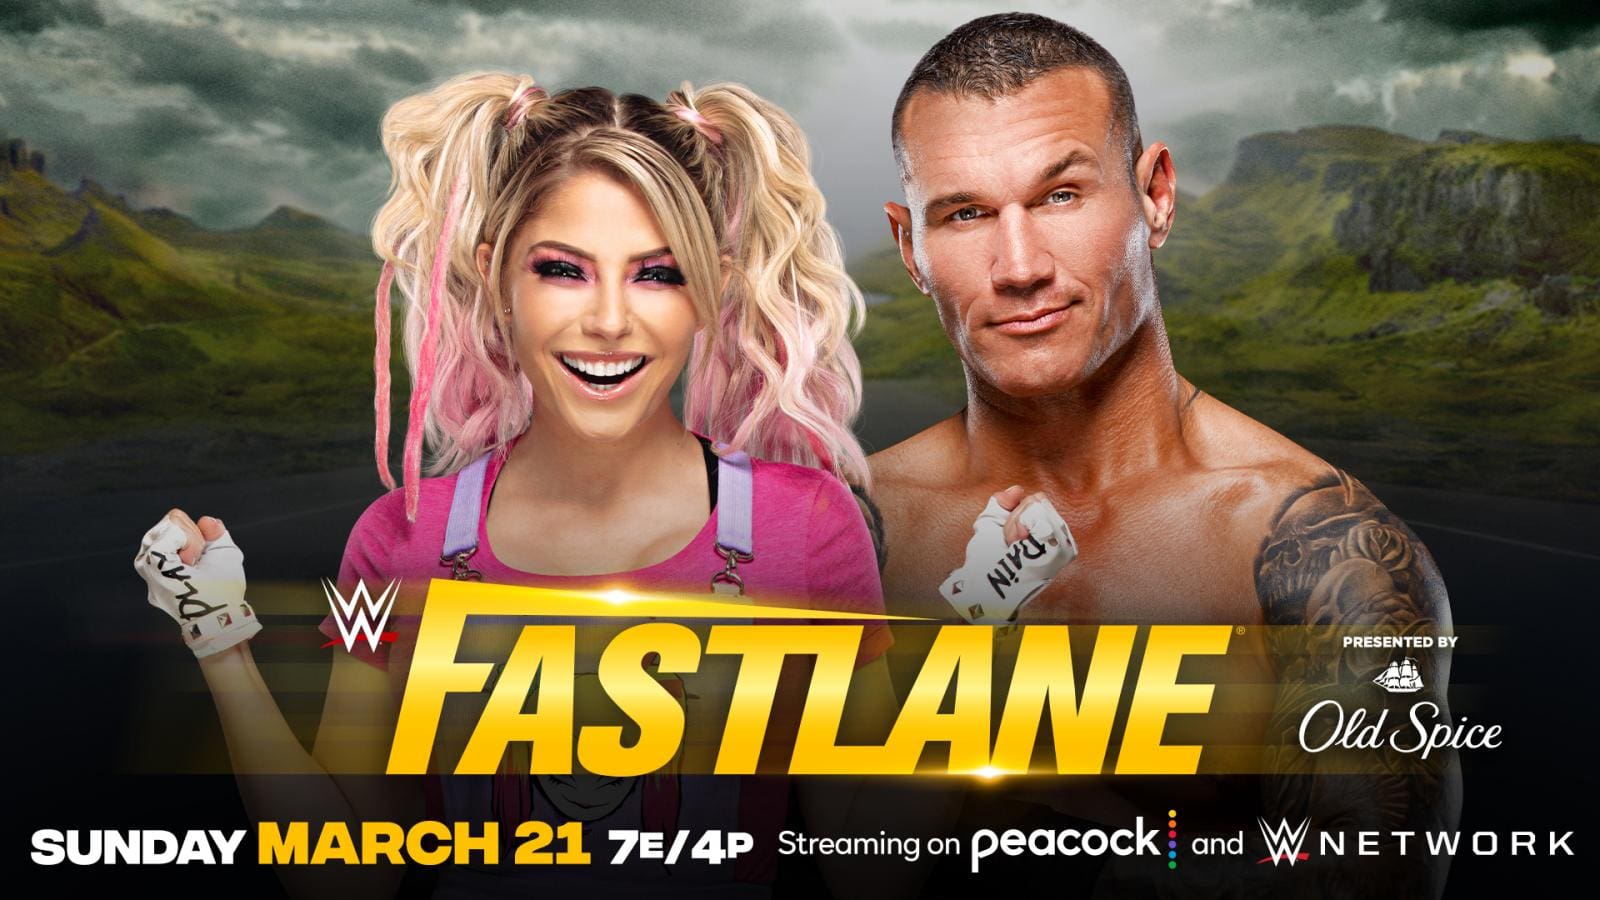 Randy Orton vs Alexa Bliss Made Official For WWE Fastlane